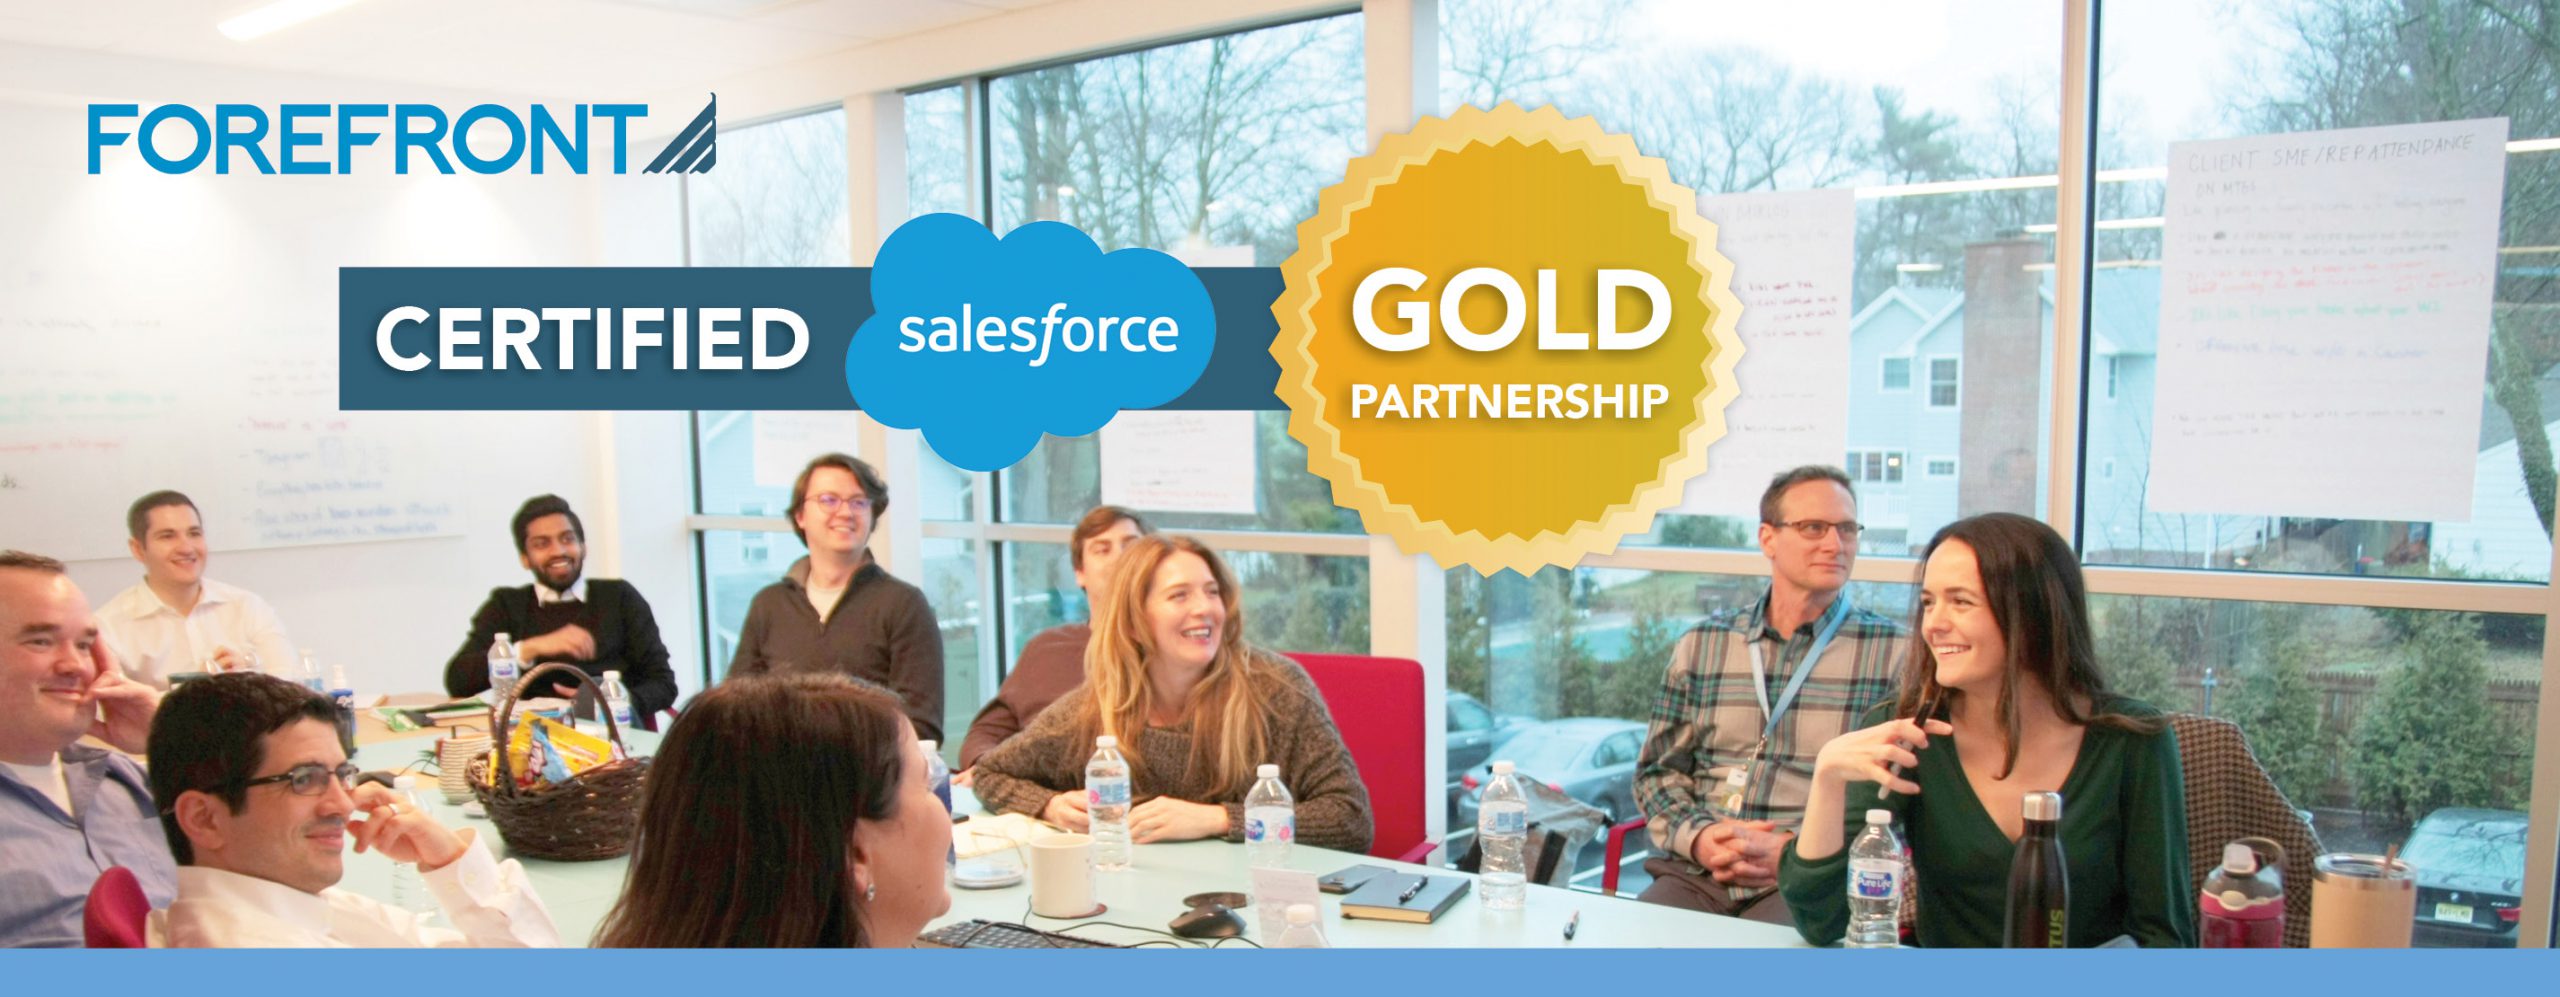 ForeFront: Certified Salesforce Gold Partnership